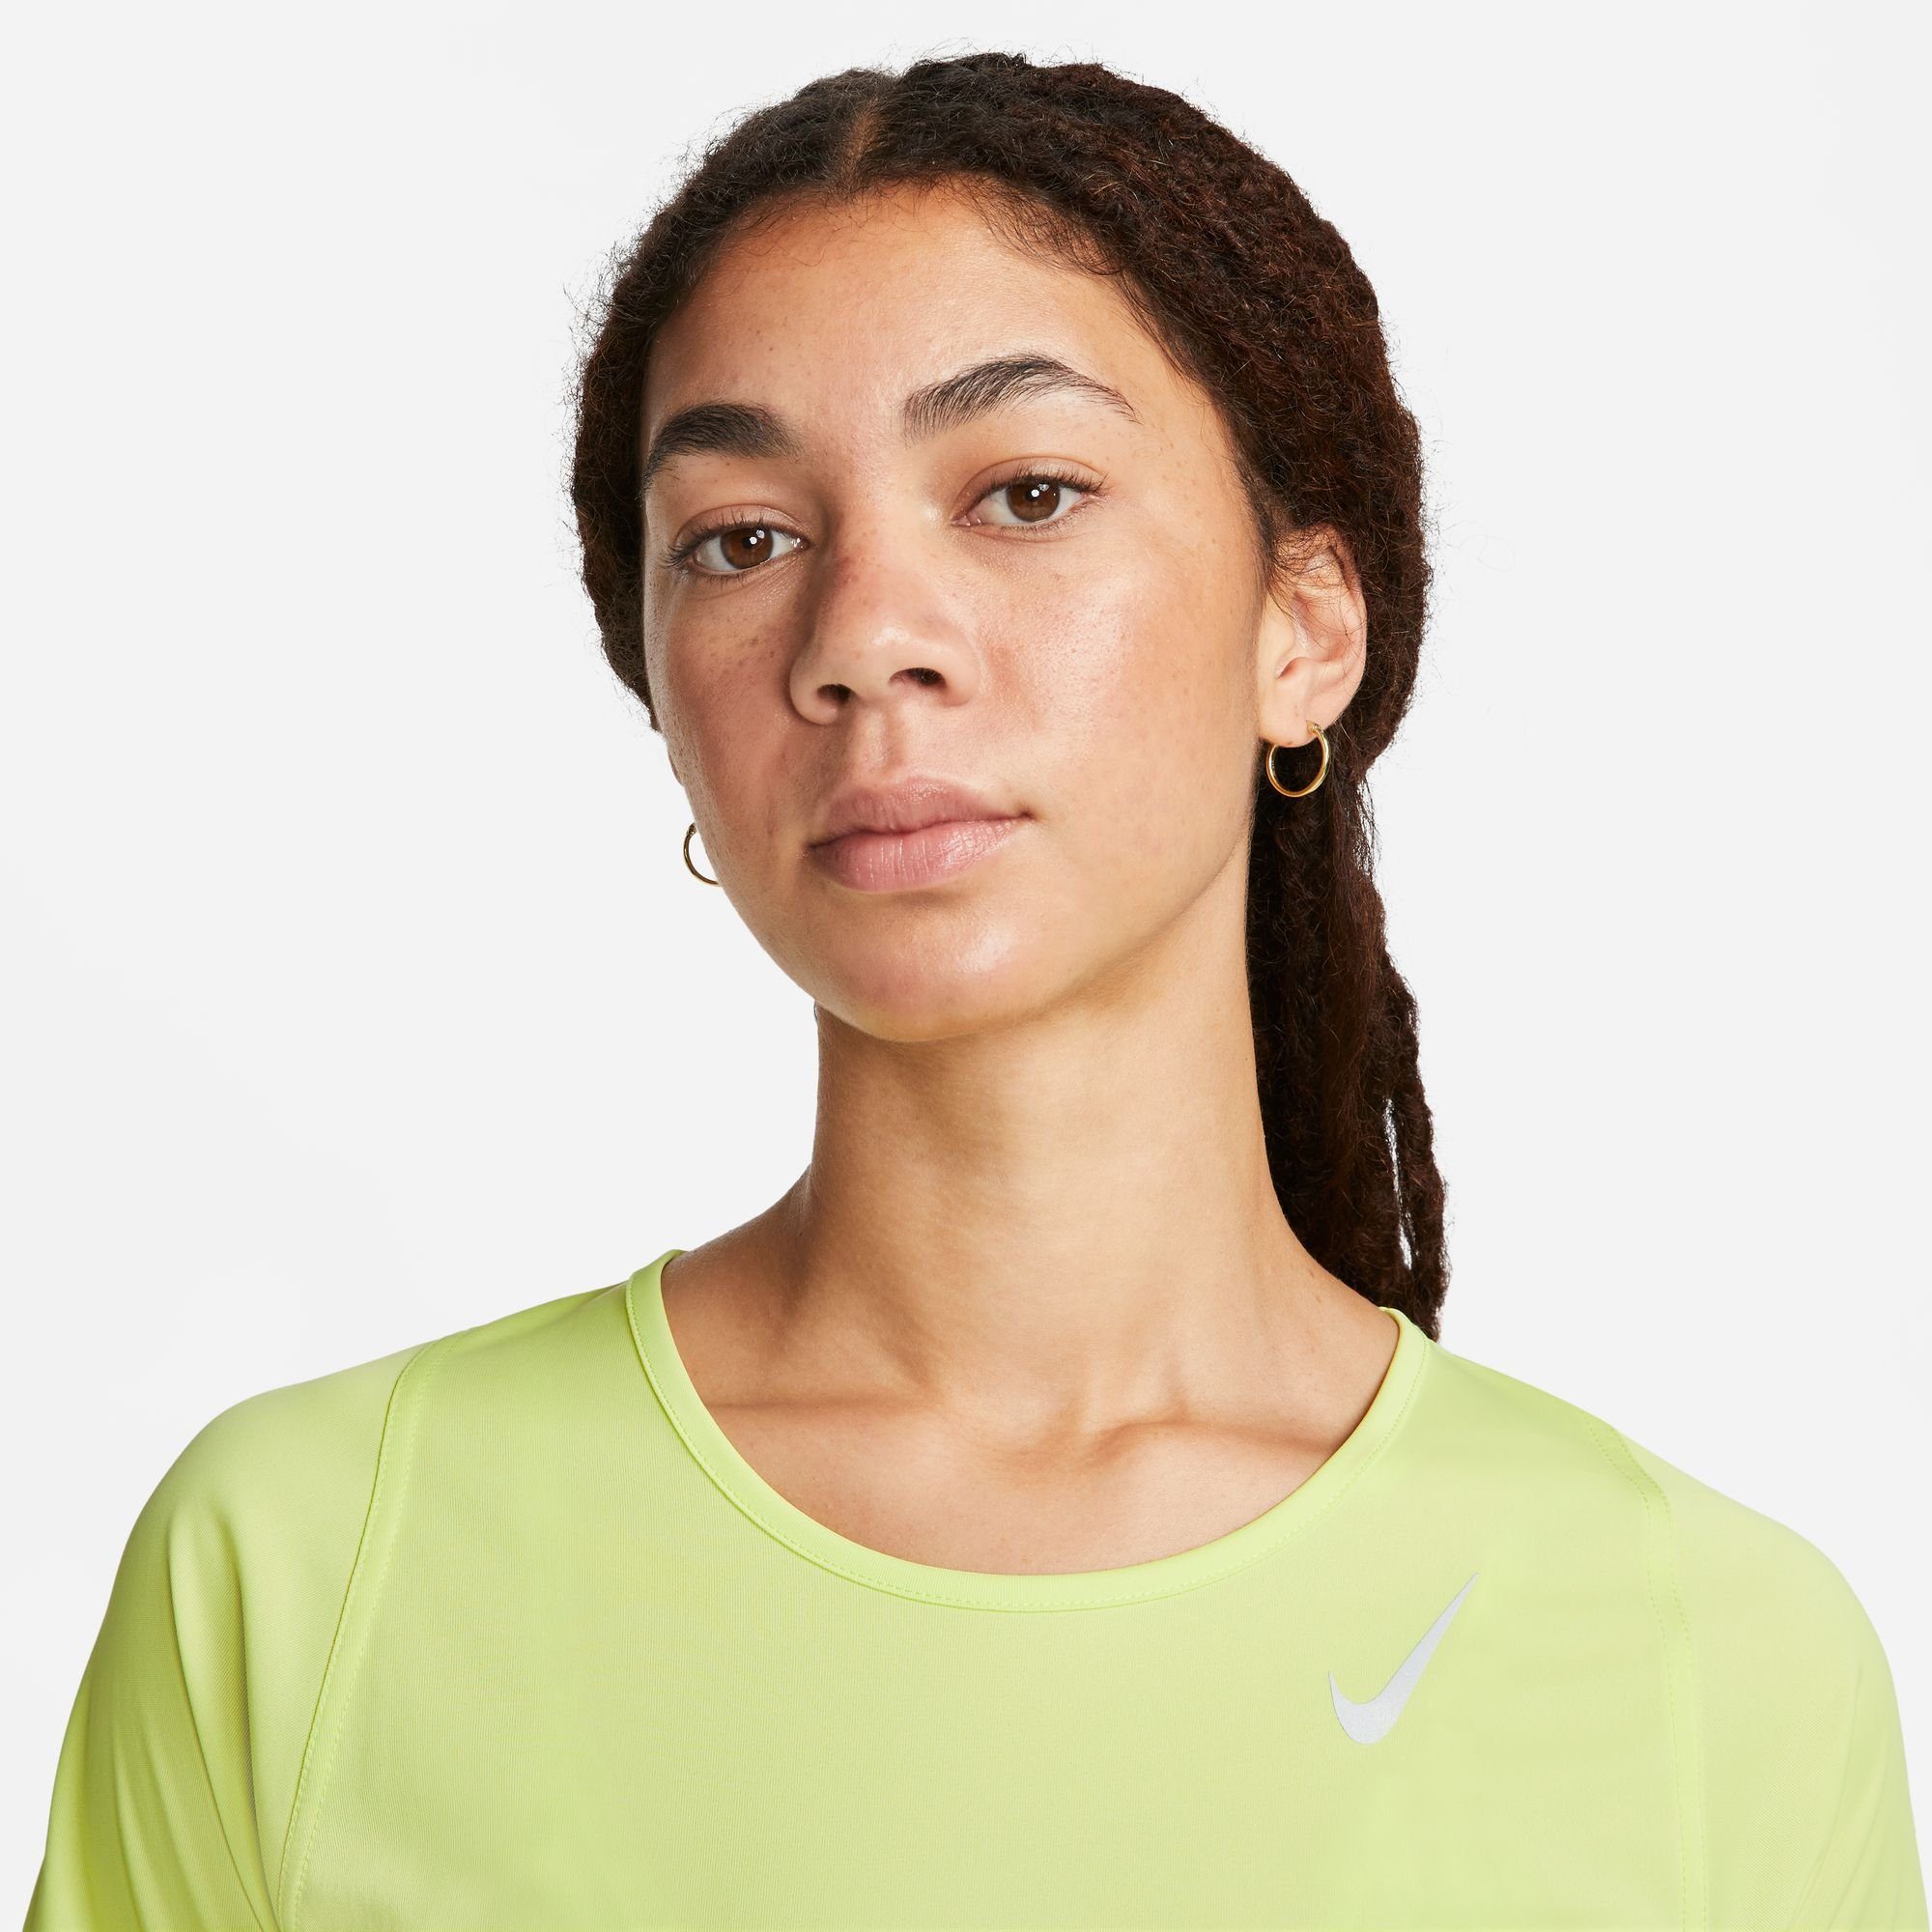 WOMEN'S RACE TWIST/REFLECTIVE LEMON LT Laufshirt TOP Nike SILV DRI-FIT SHORT-SLEEVE RUNNING